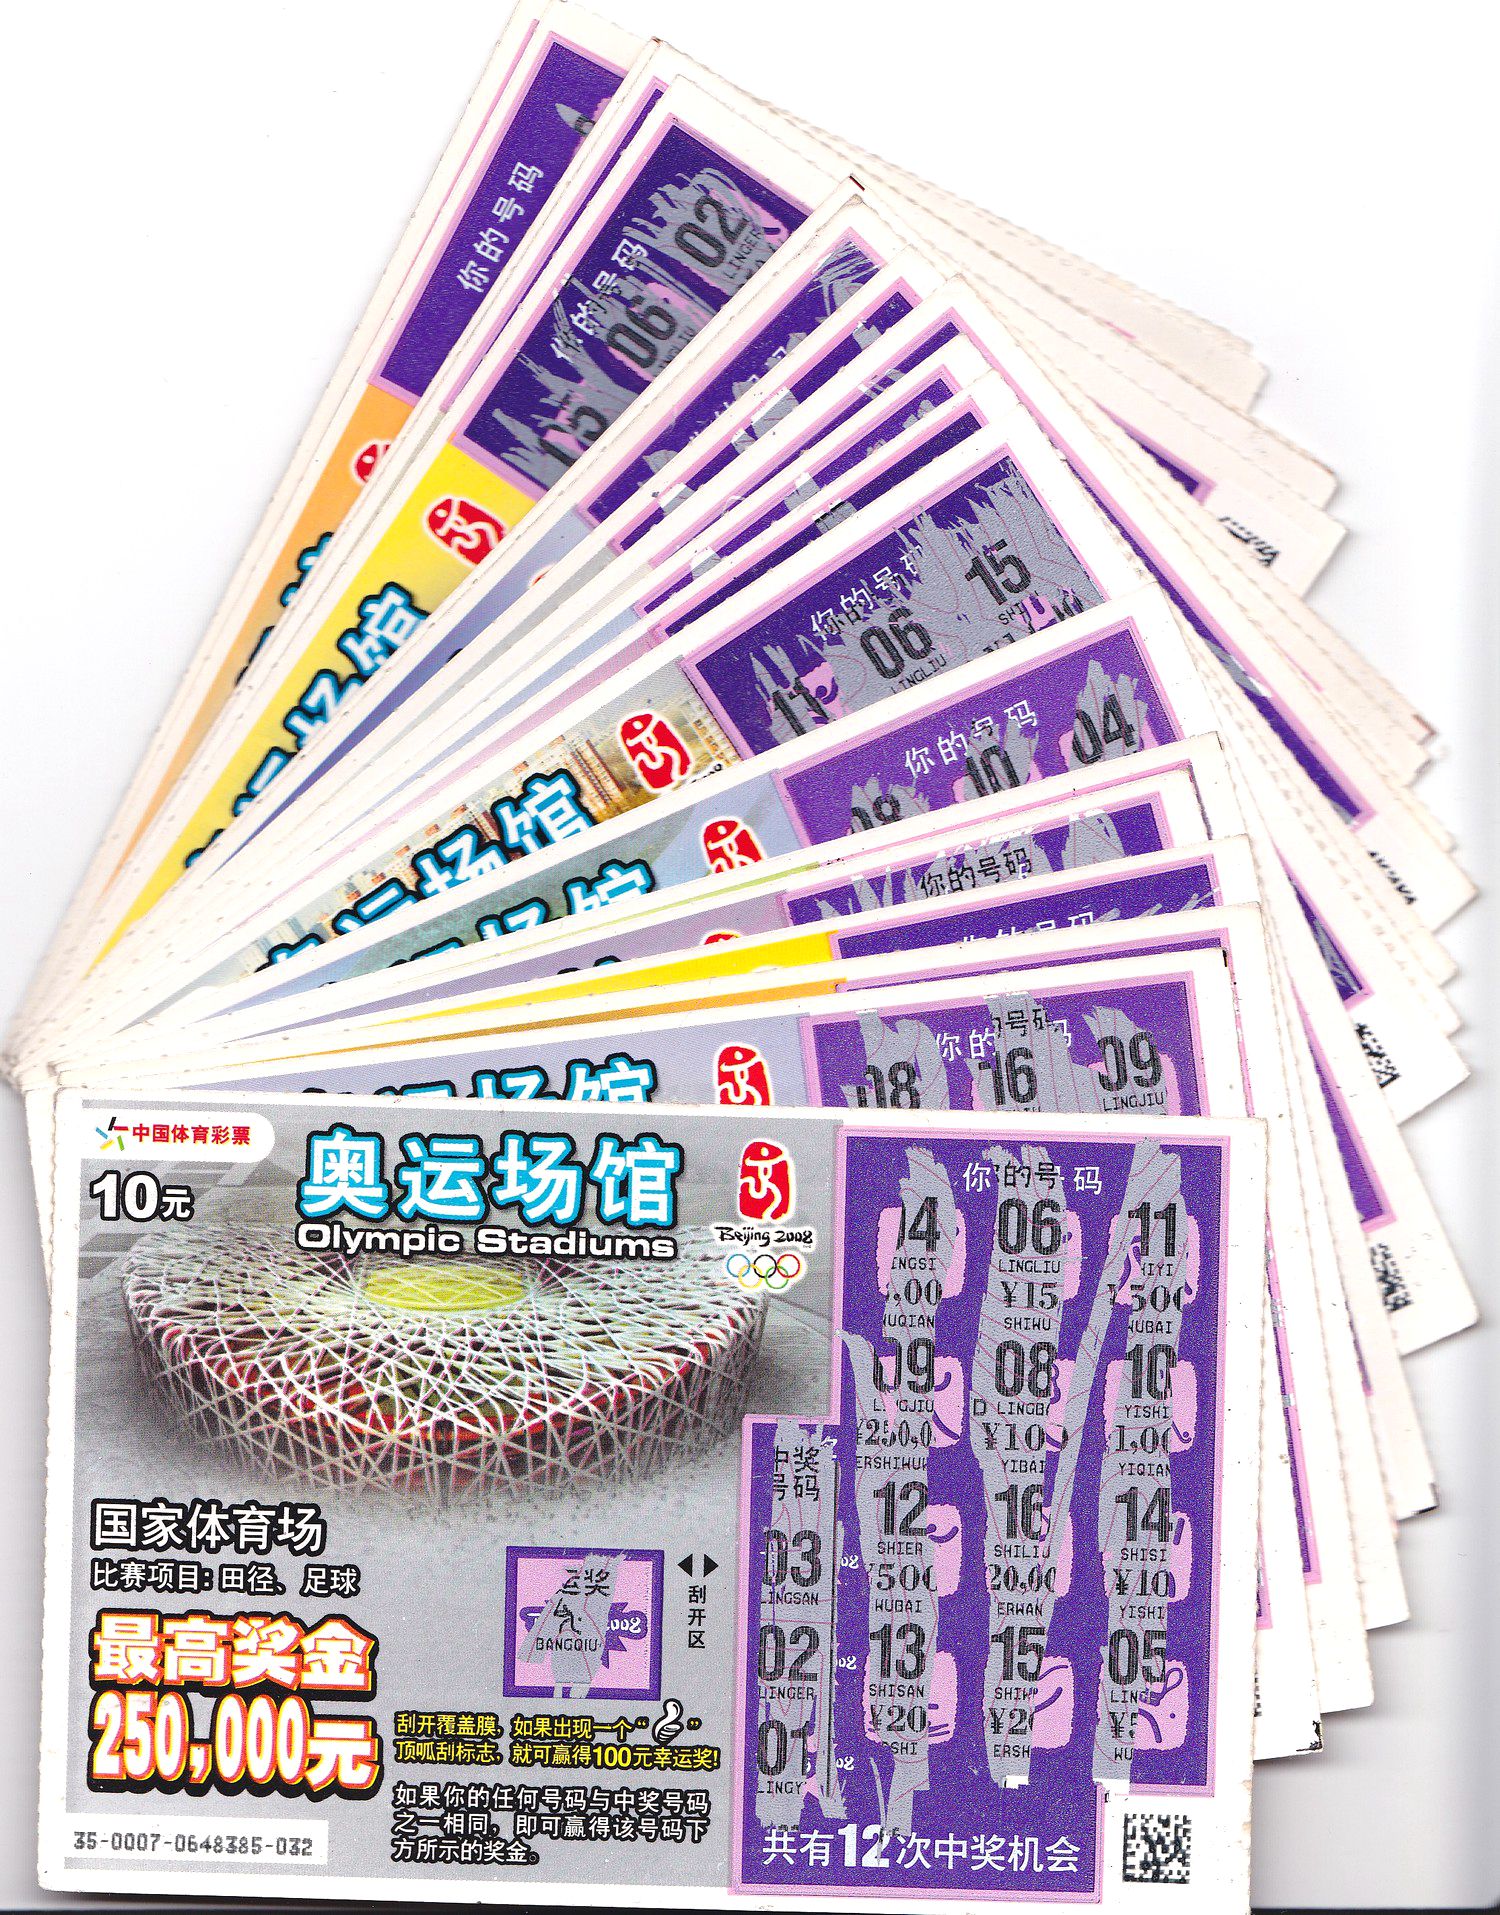 T4050, Beijing Olympic Stadiums, 30 Pcs Lottery Tickets, 2007